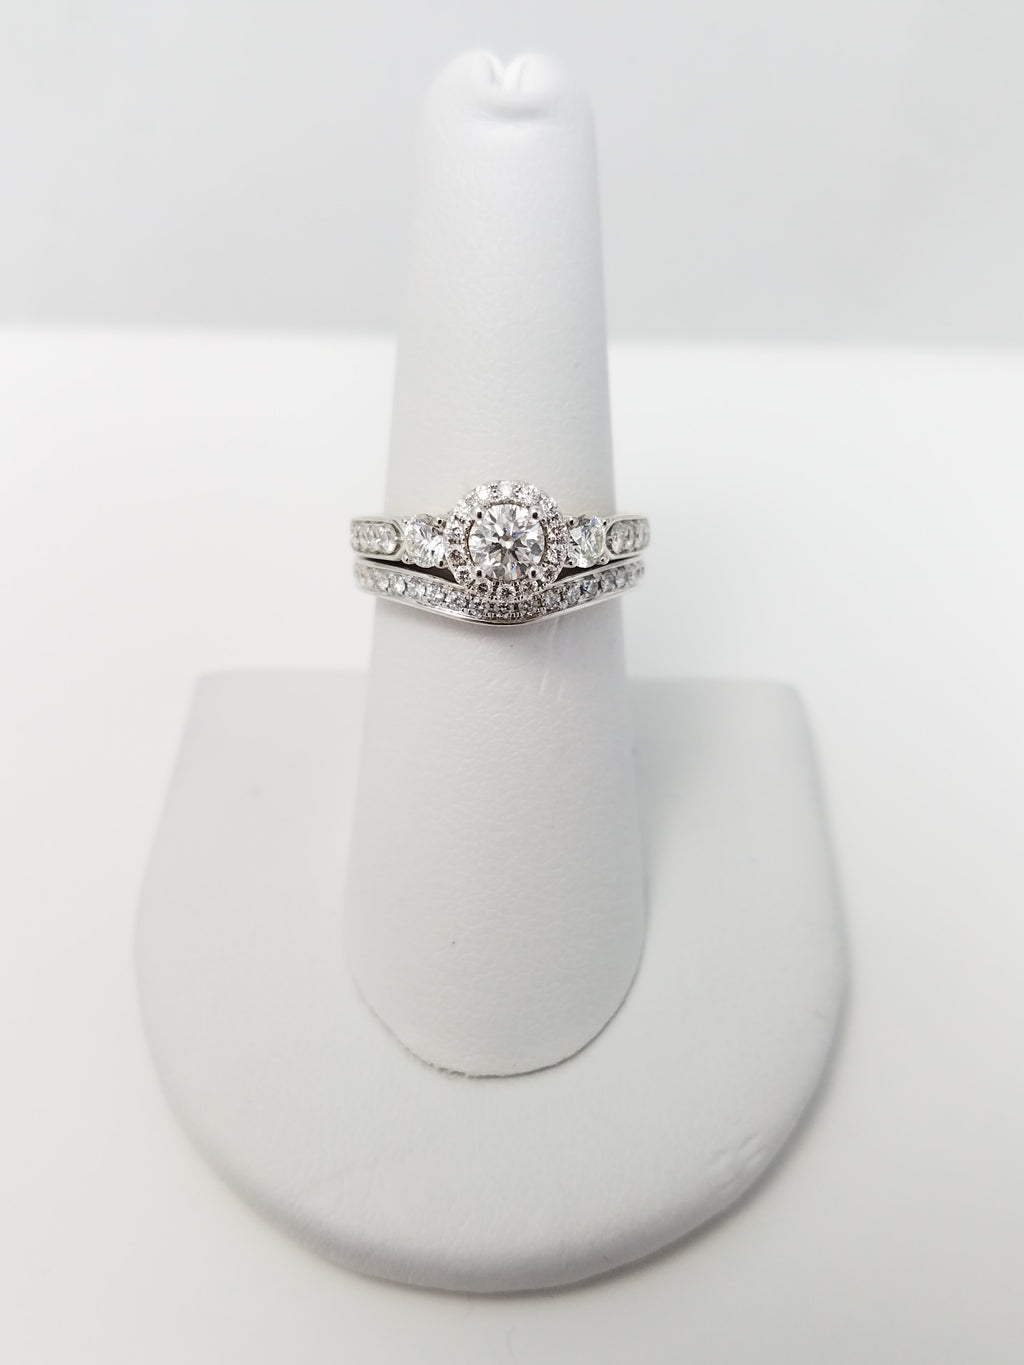 $4500 Disney 14k Two Tone Gold Natural Diamond Wedding Ring Set